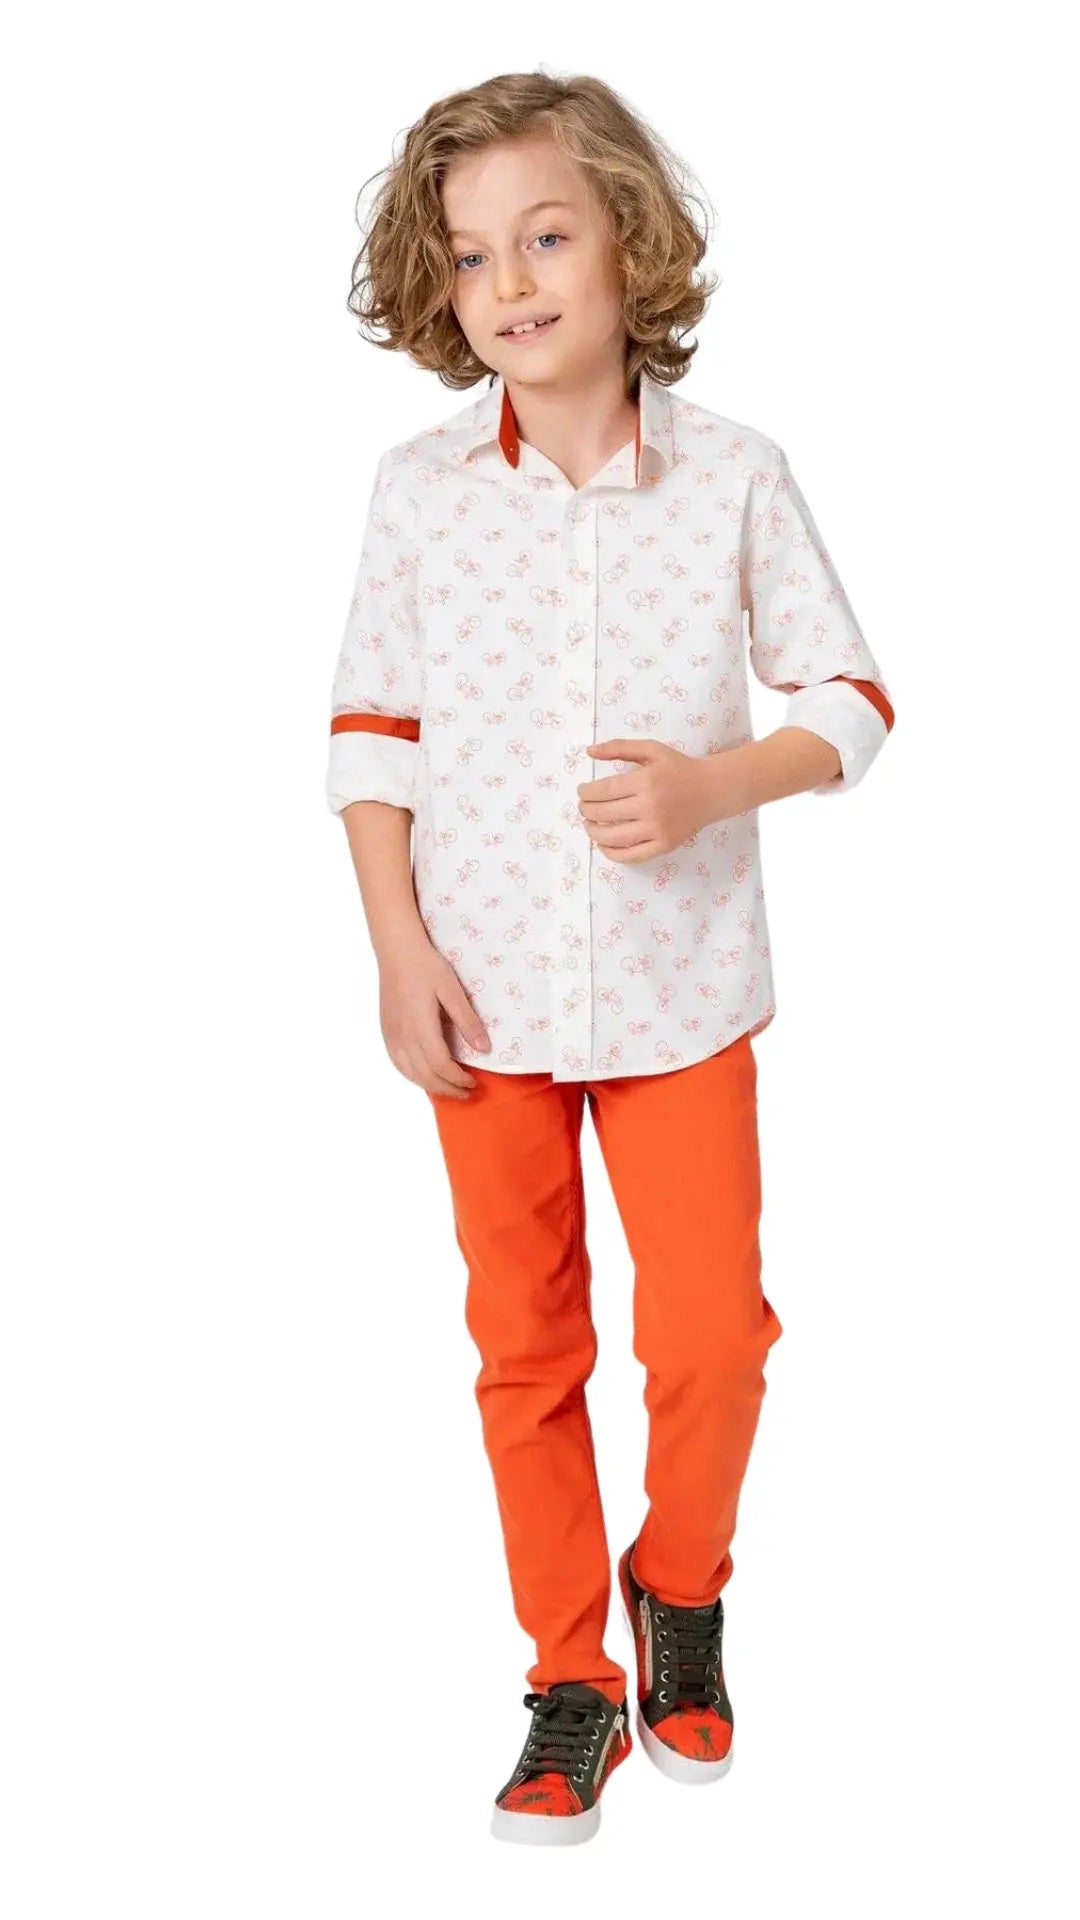 InCity Boys Tween 7-14 Years Orange Blue Long Sleeve Button-Down Fashion Pontoon Dress Shirt InCity Boys & Girls